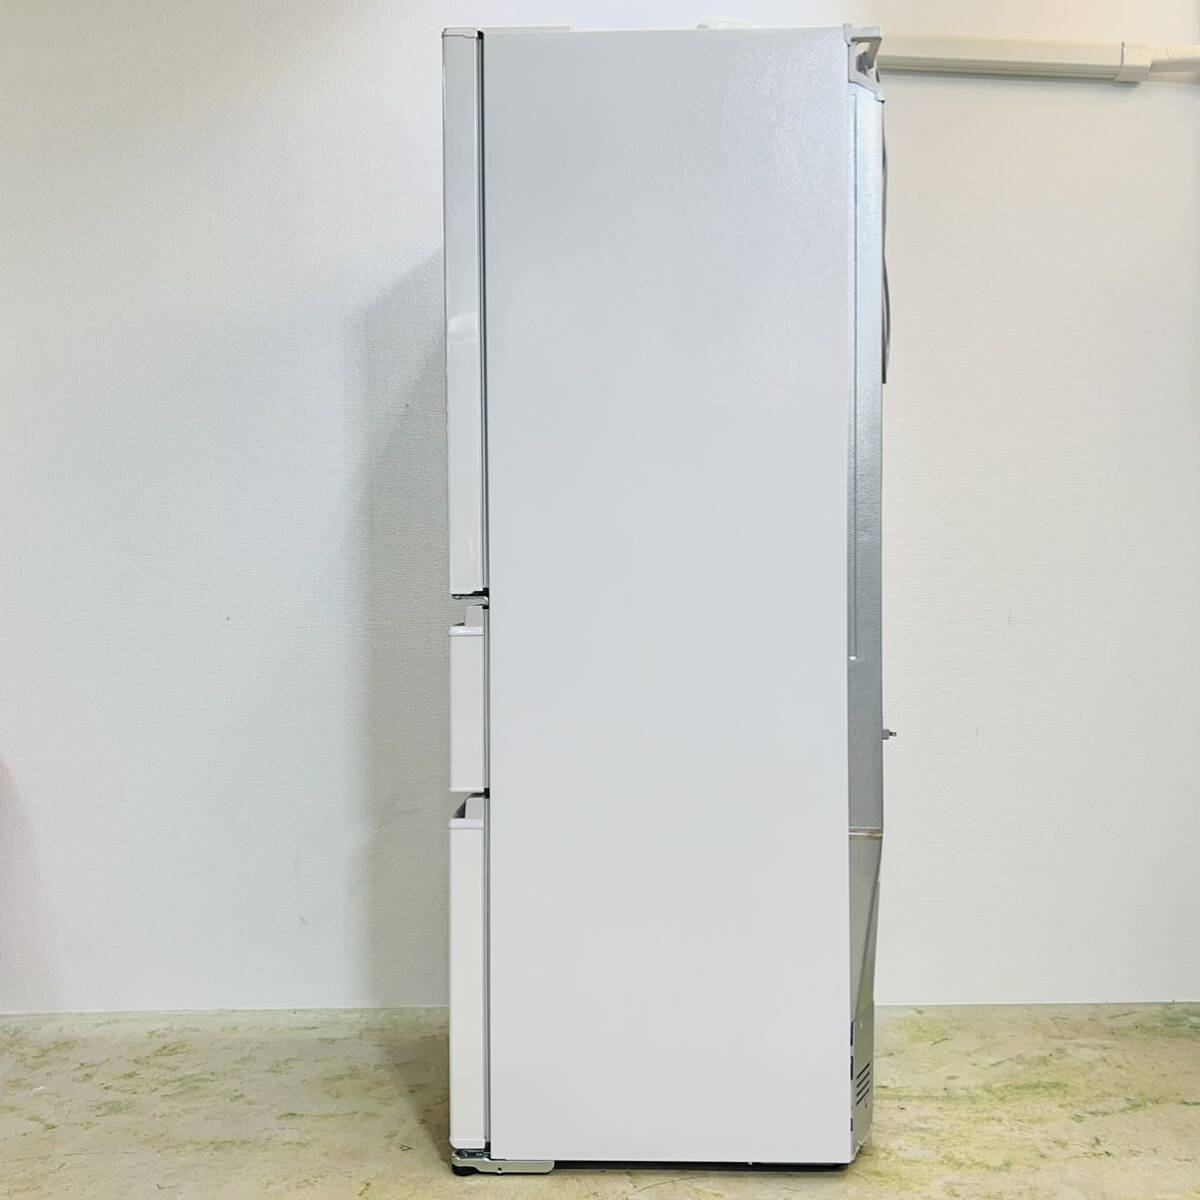  beautiful goods 2021 year made Mitsubishi refrigerator MR-CD41F-W1 type non freon freezing refrigerator 3 door right opening automatic icemaker MITSUBISH